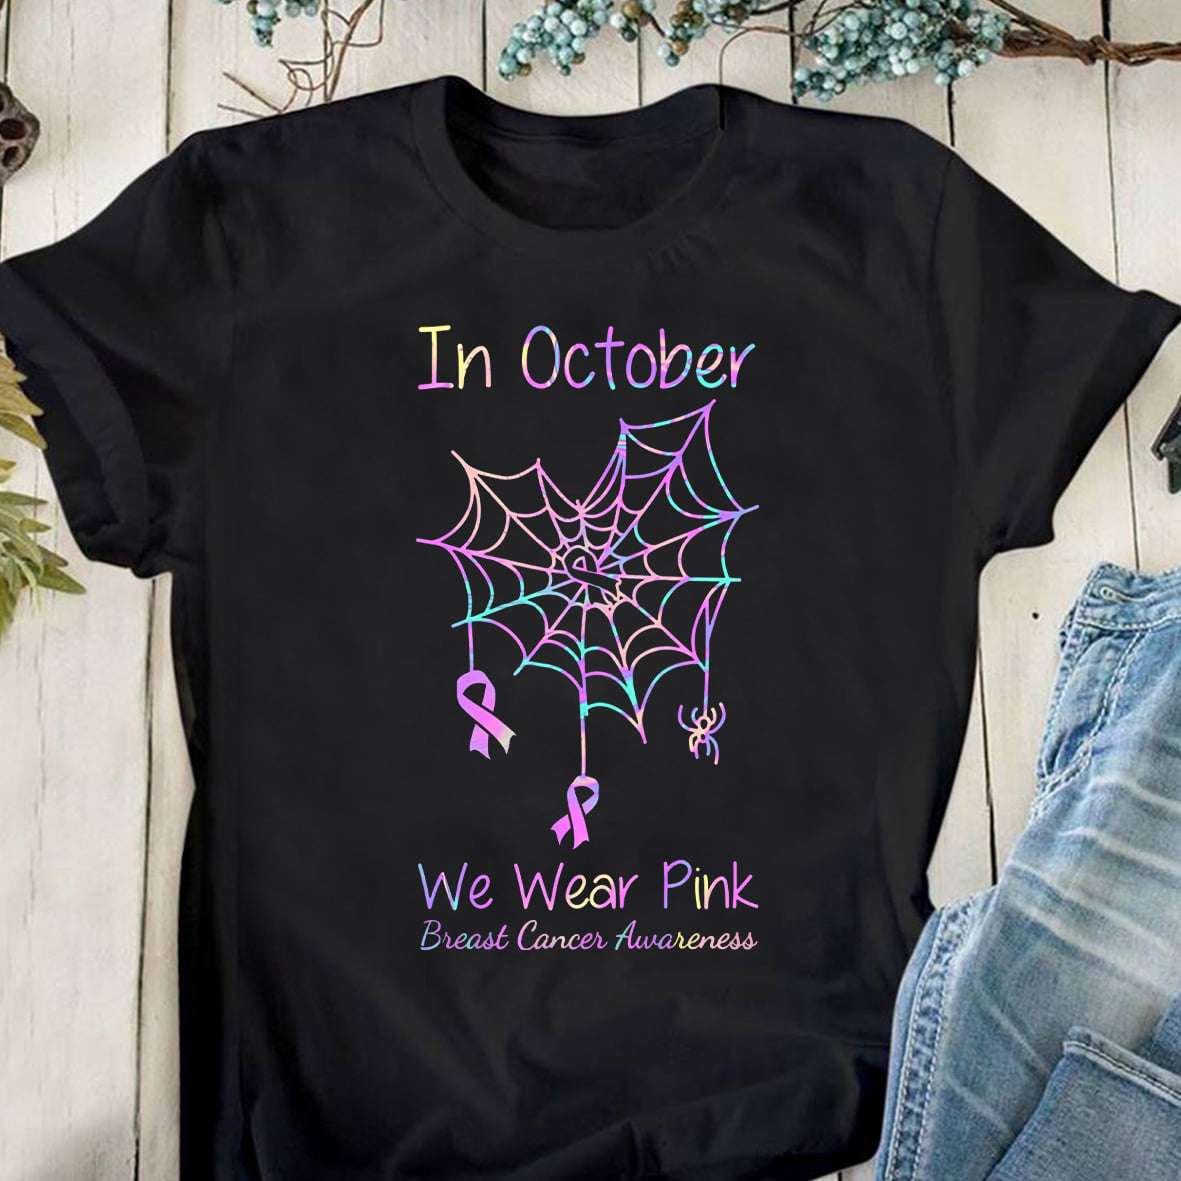 In october we wear pink - Breast cancer awareness, spider net cancer ribbon